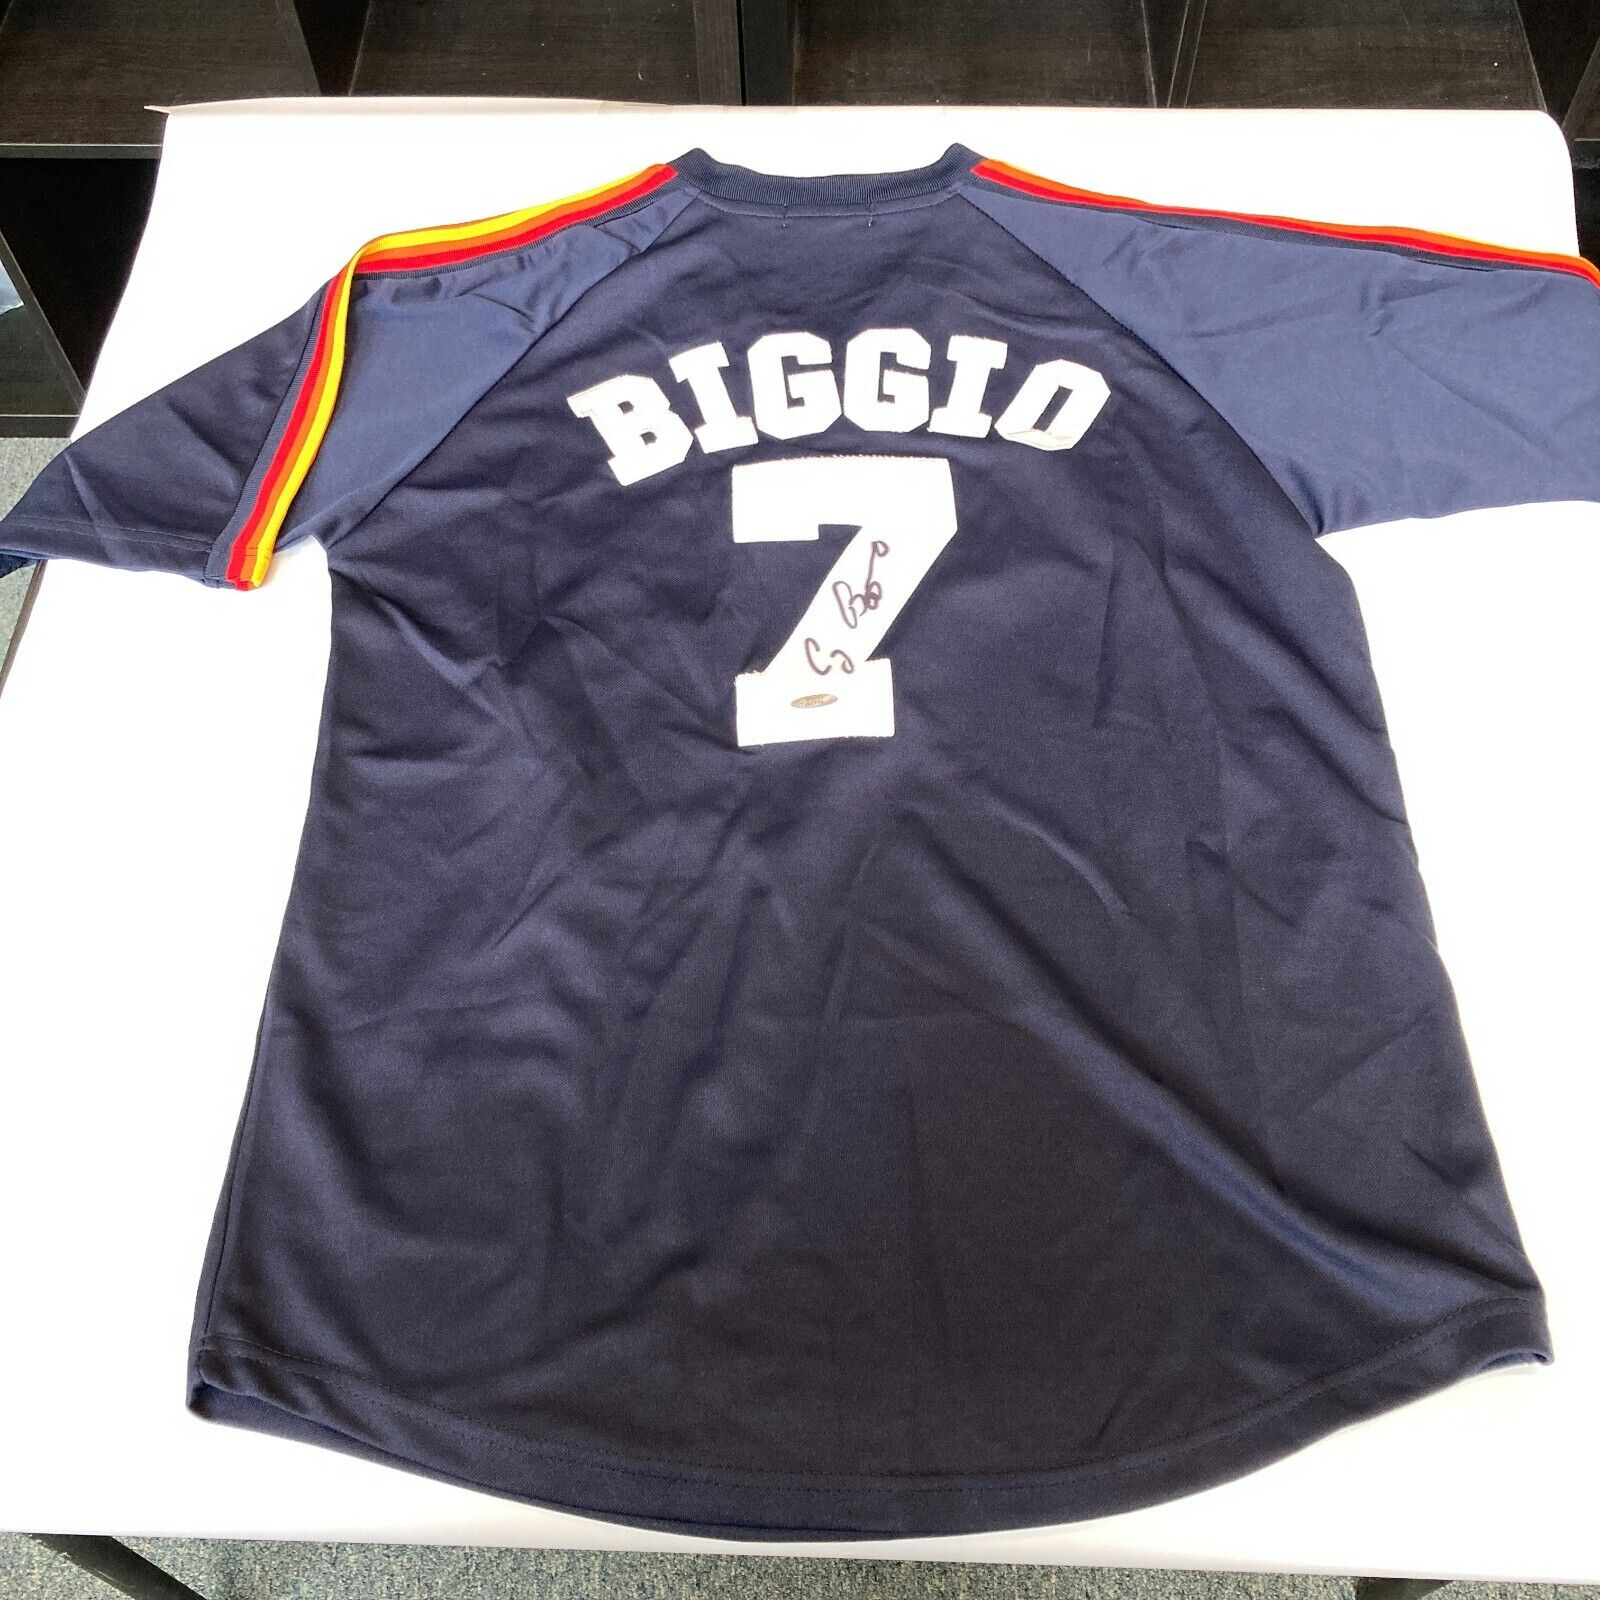 Craig Biggio Signed Authentic 1988 Houston Astros Jersey Tristar